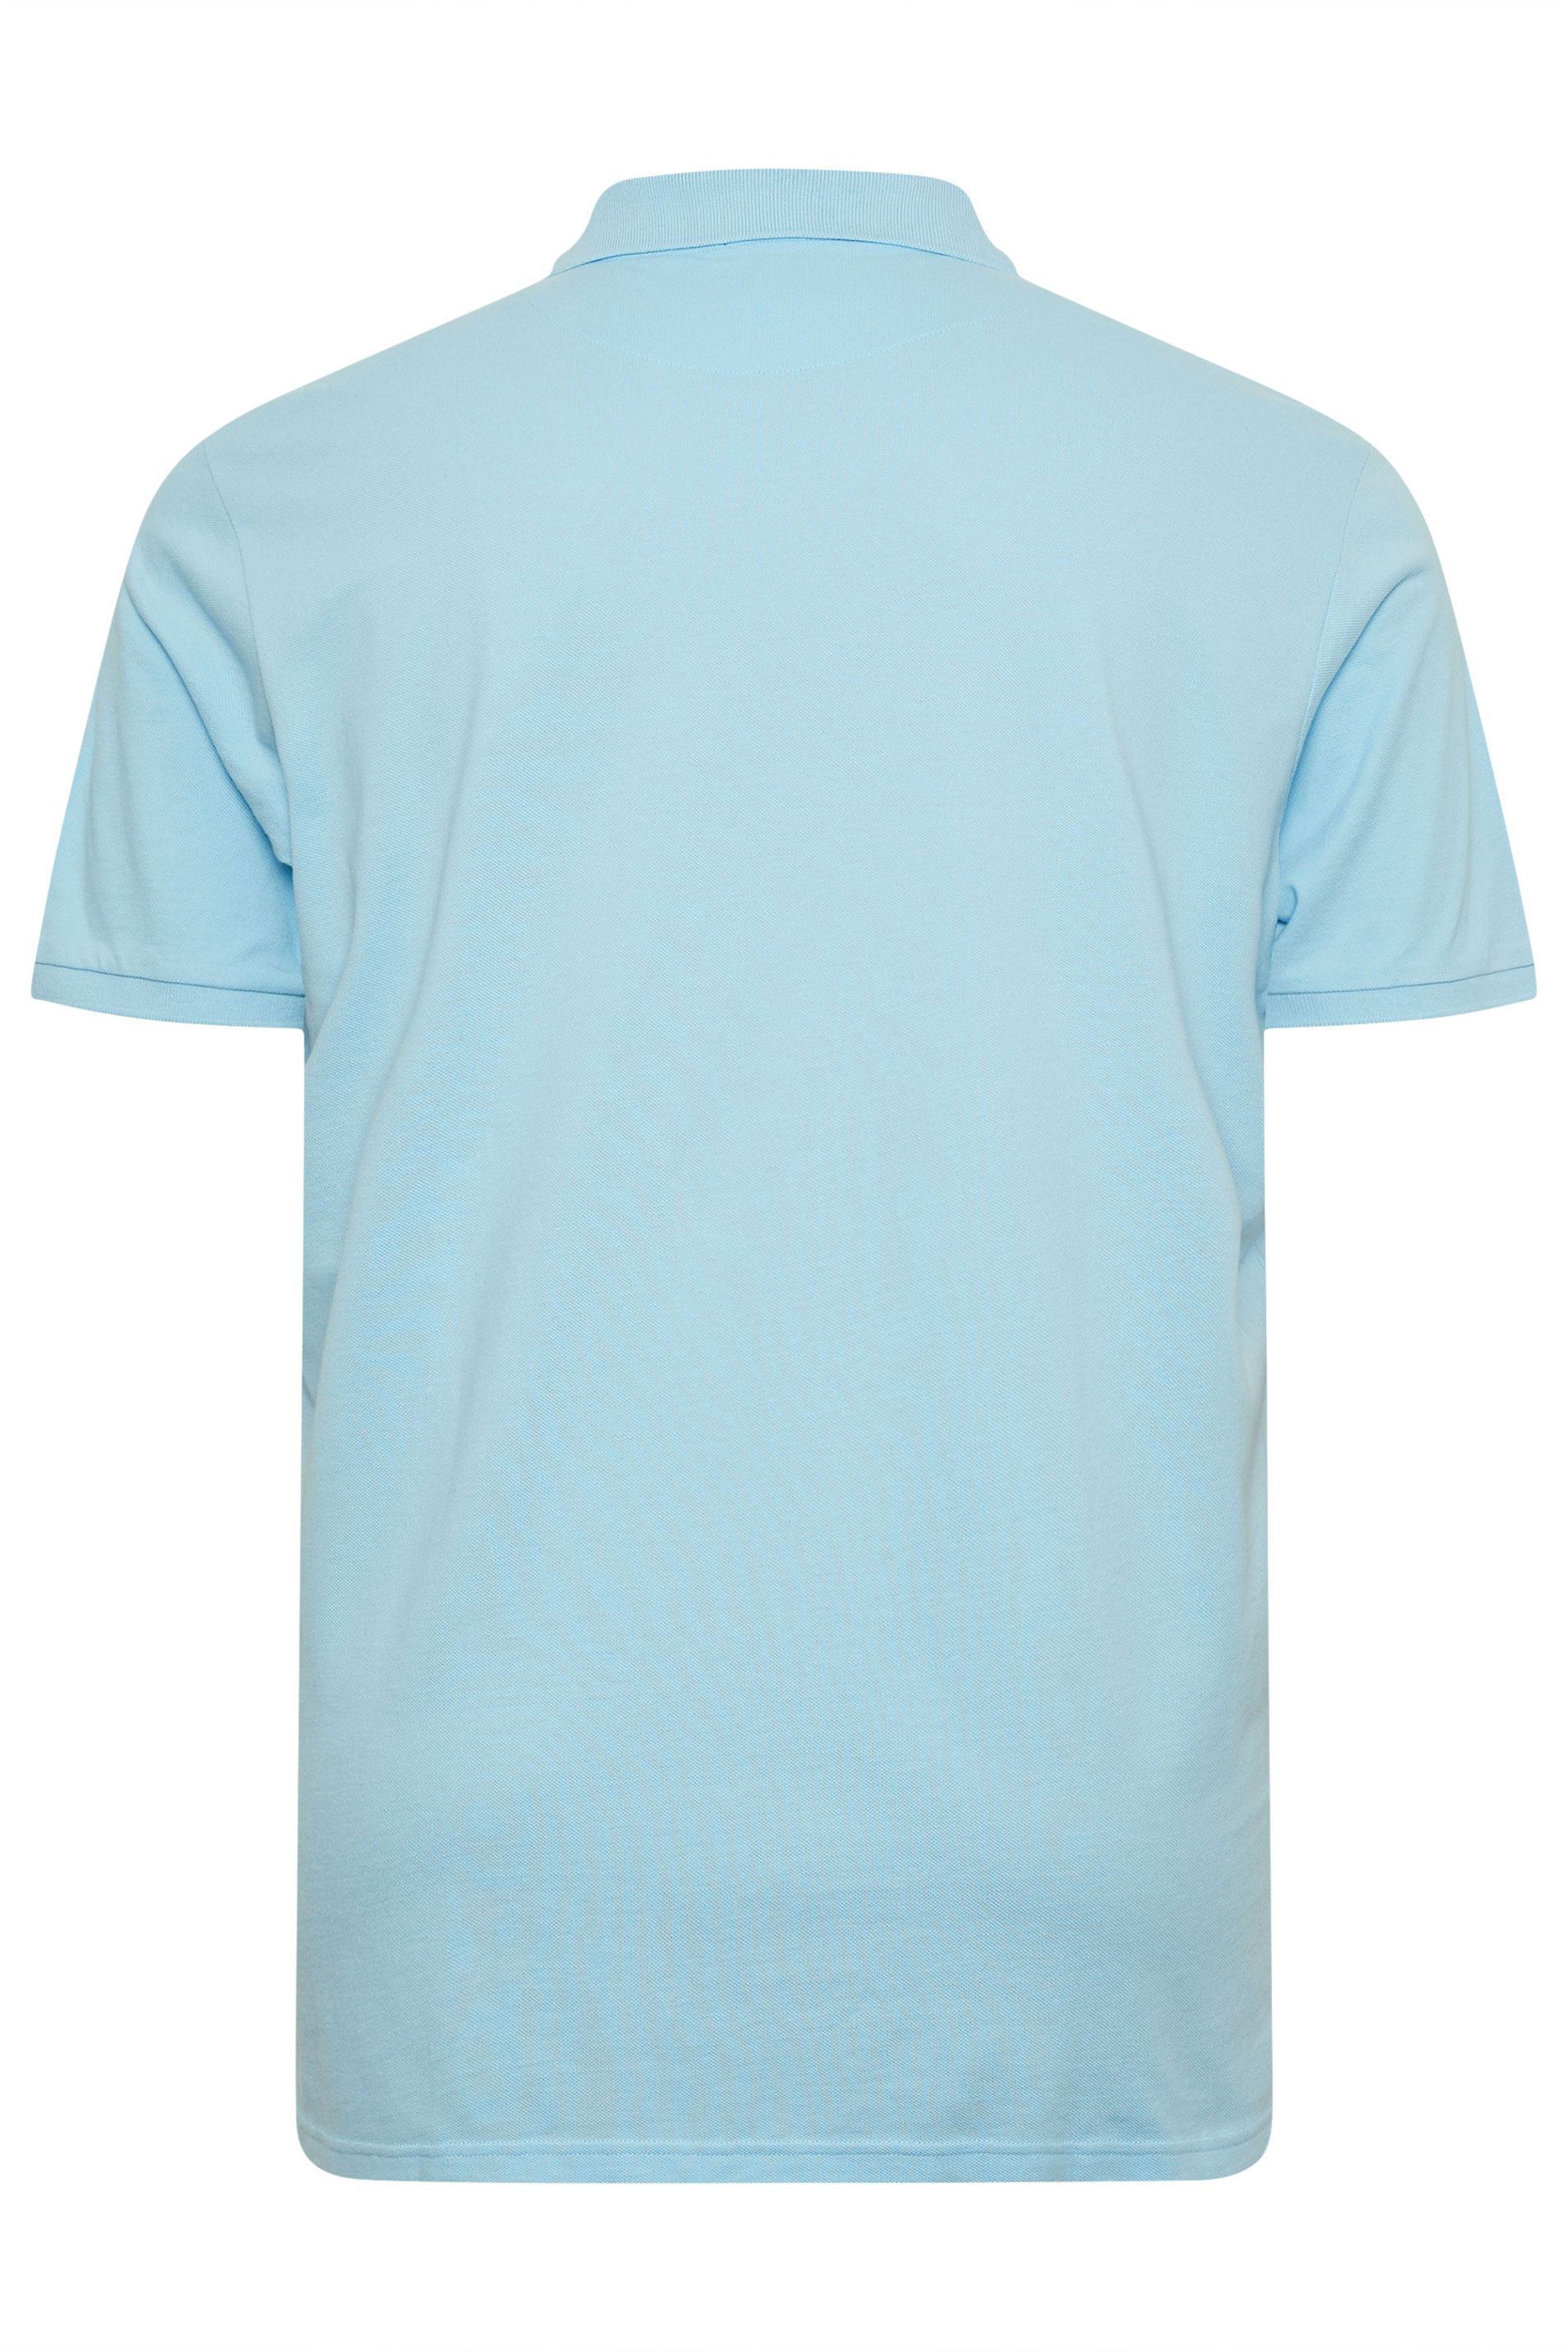 U.S. POLO ASSN. Big & Tall Blue Pique Polo Shirt | BadRhino 2